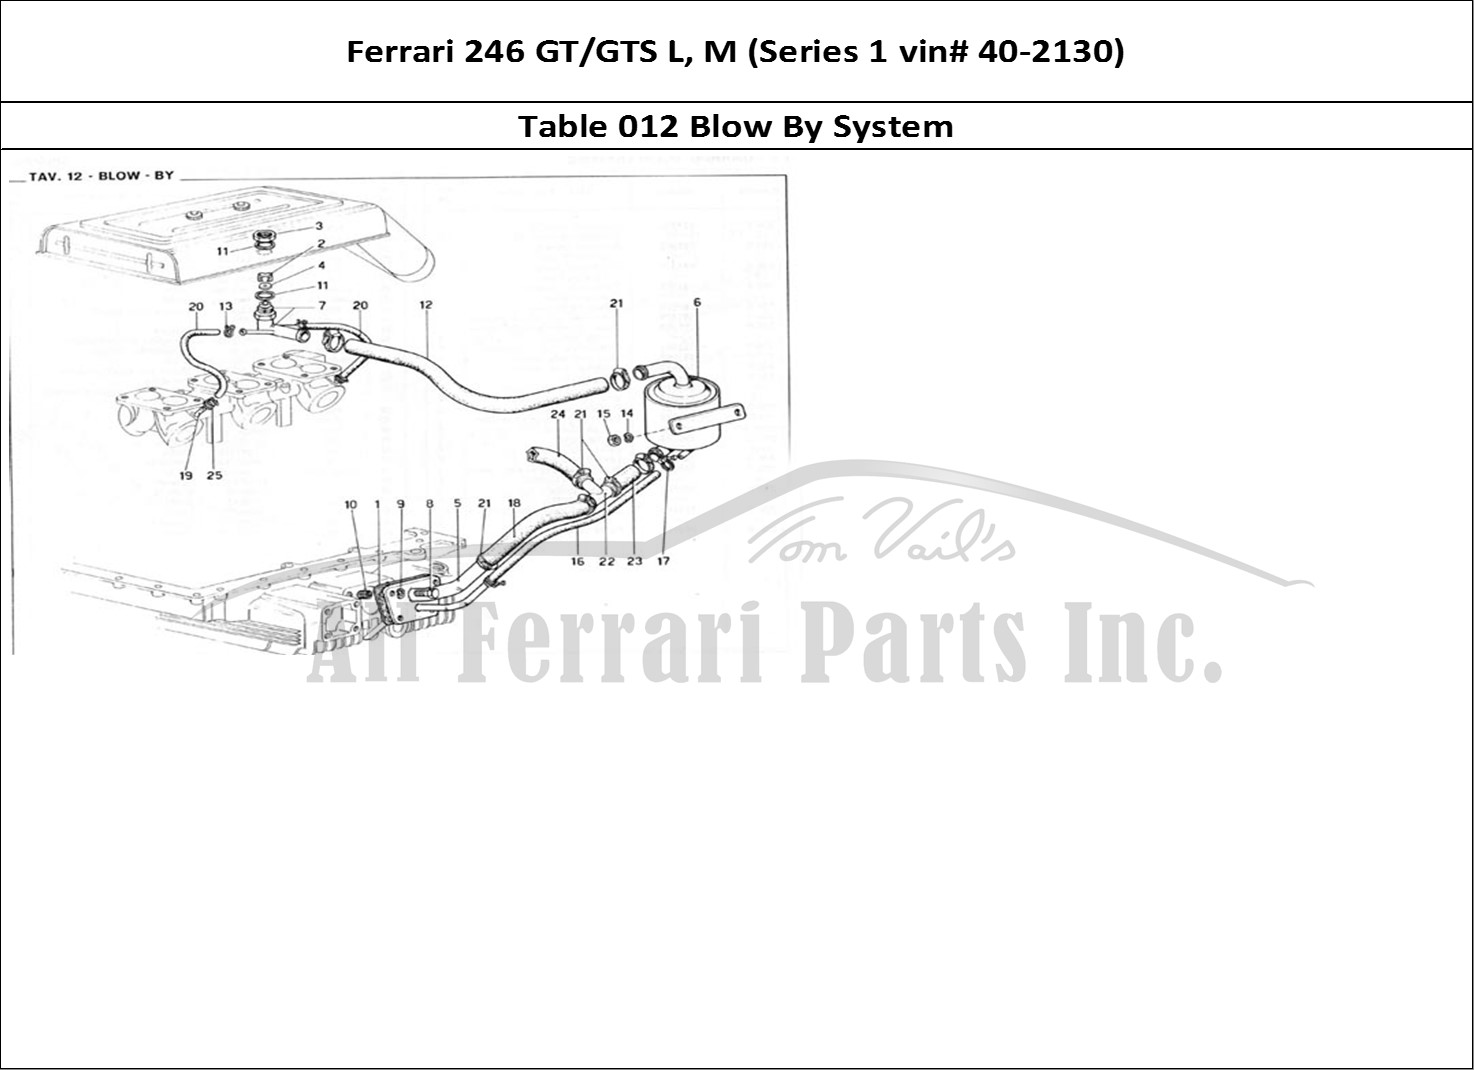 Ferrari Parts Ferrari 246 GT Series 1 Page 012 Blow By System